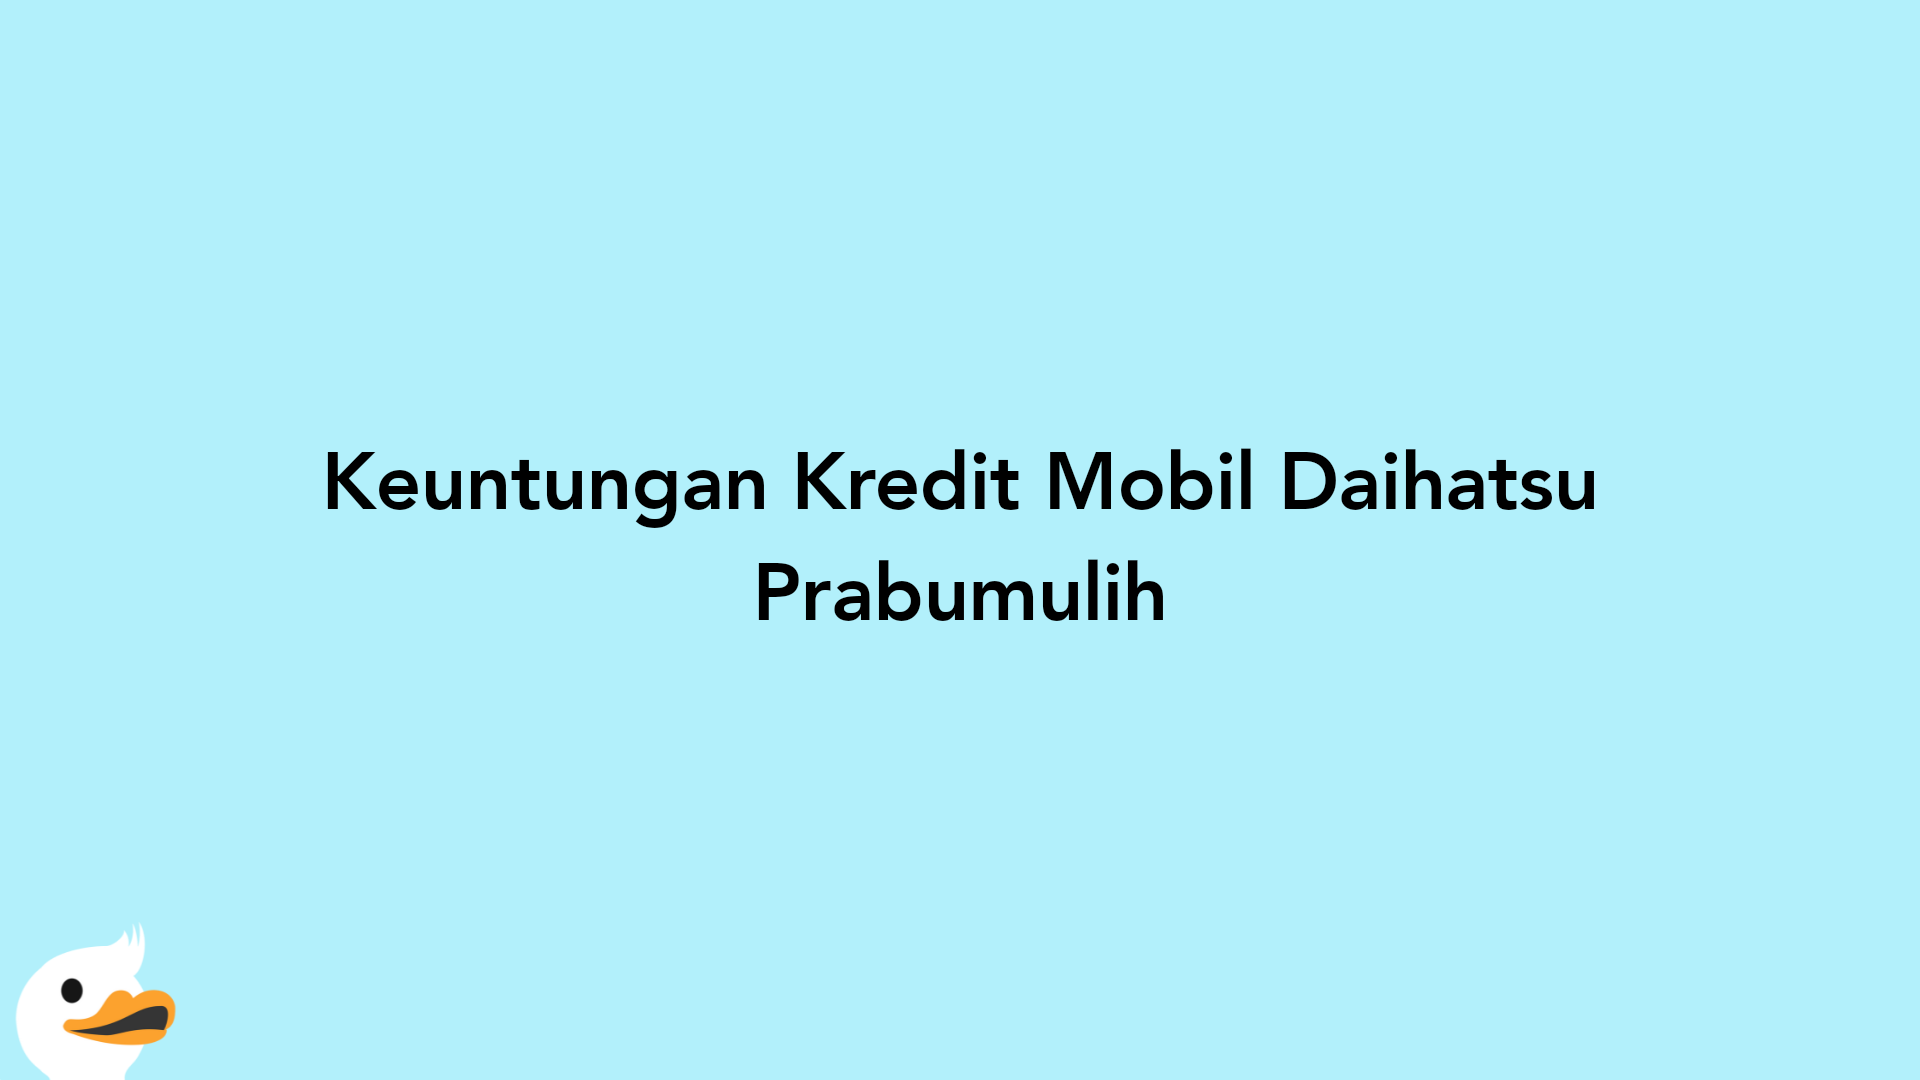 Keuntungan Kredit Mobil Daihatsu Prabumulih